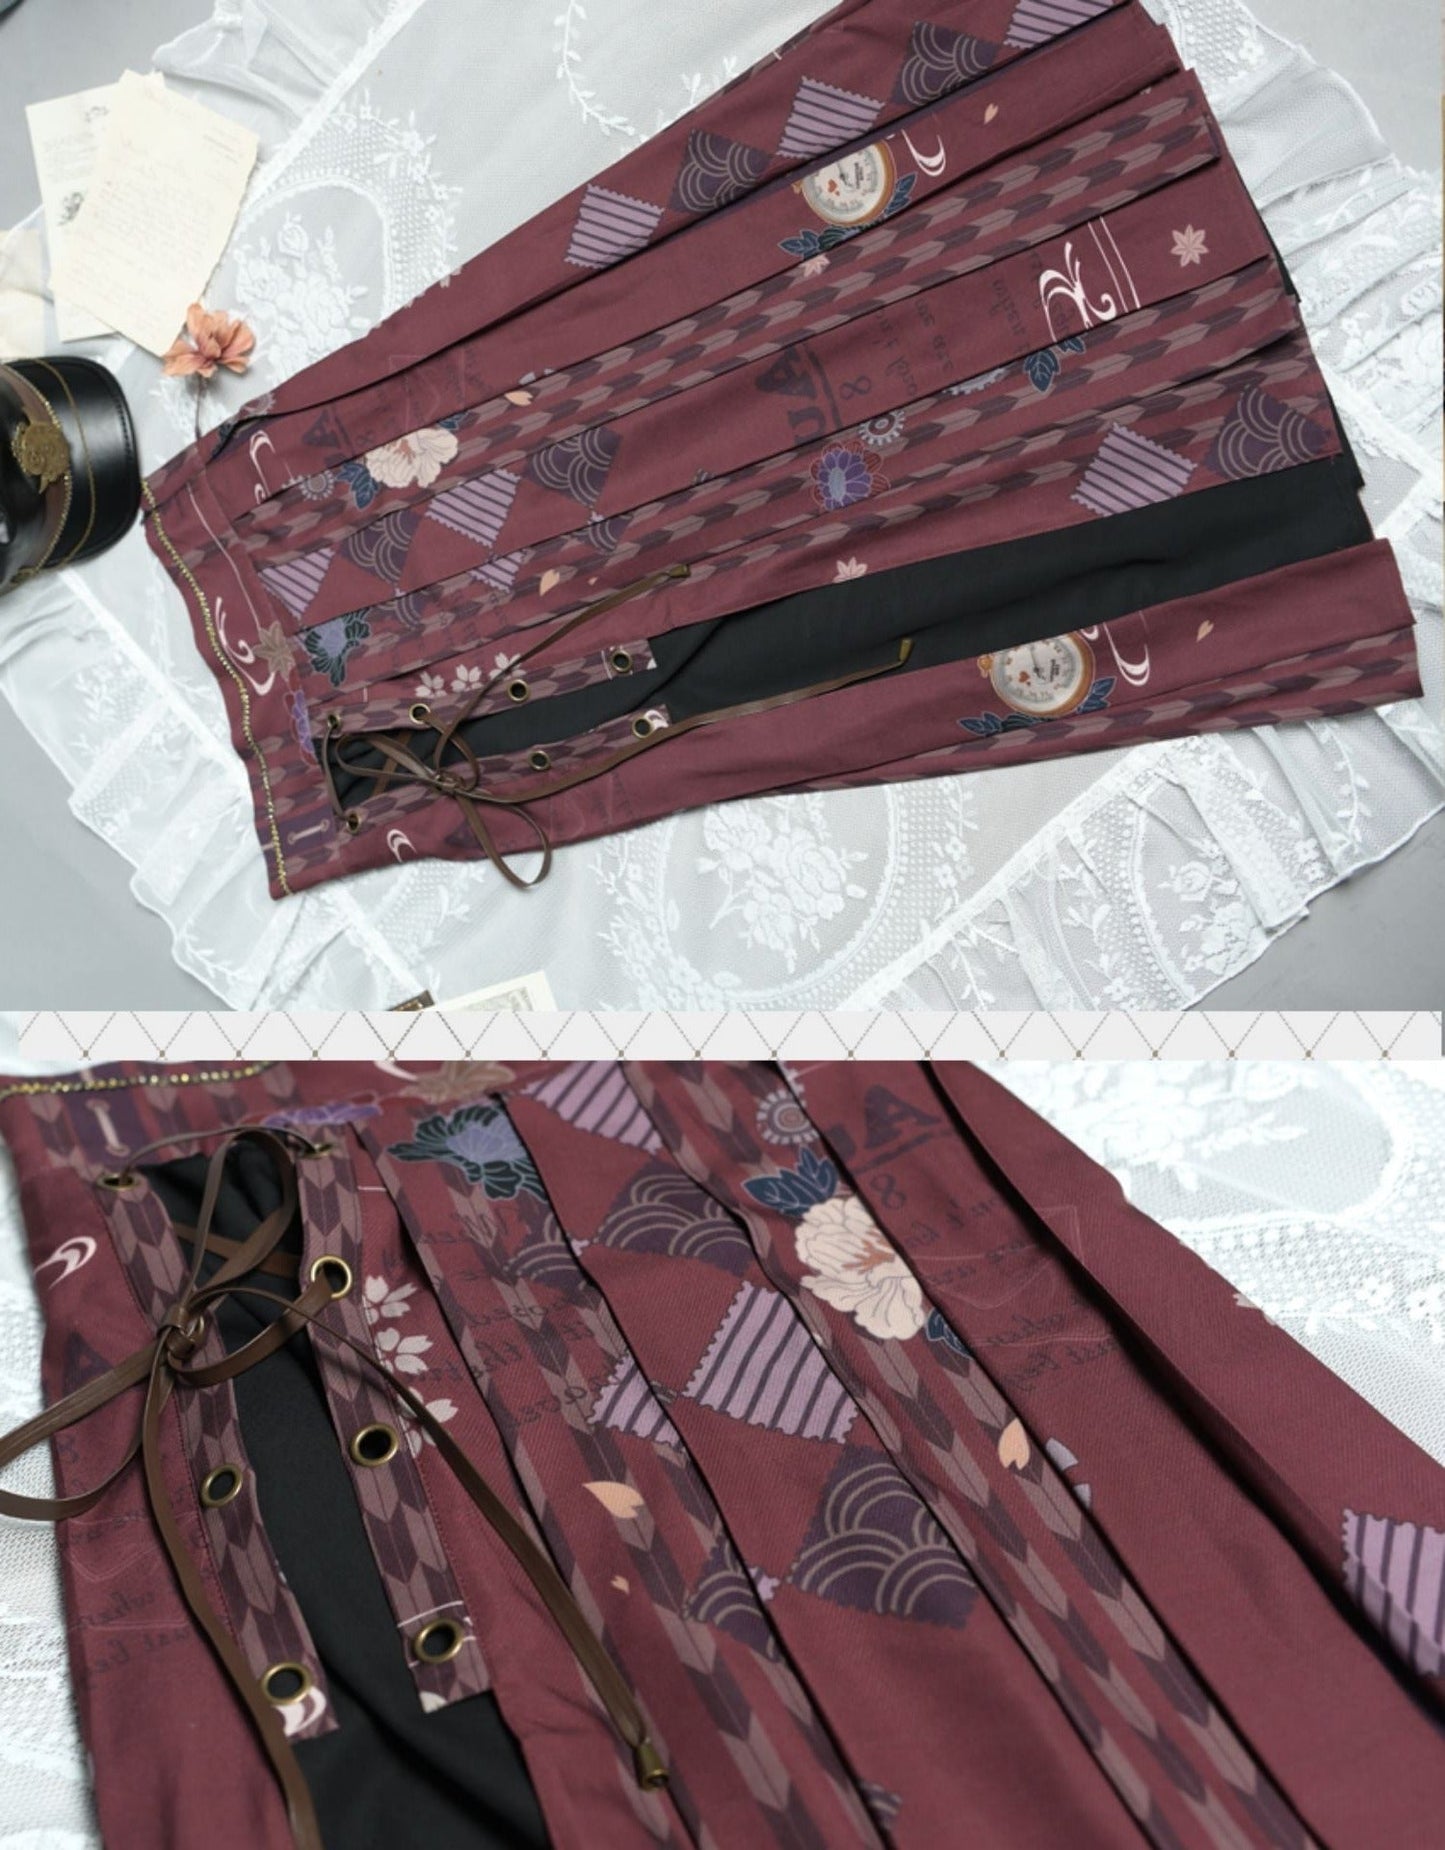 Traveler's diary Japanese-style print pleated skirt